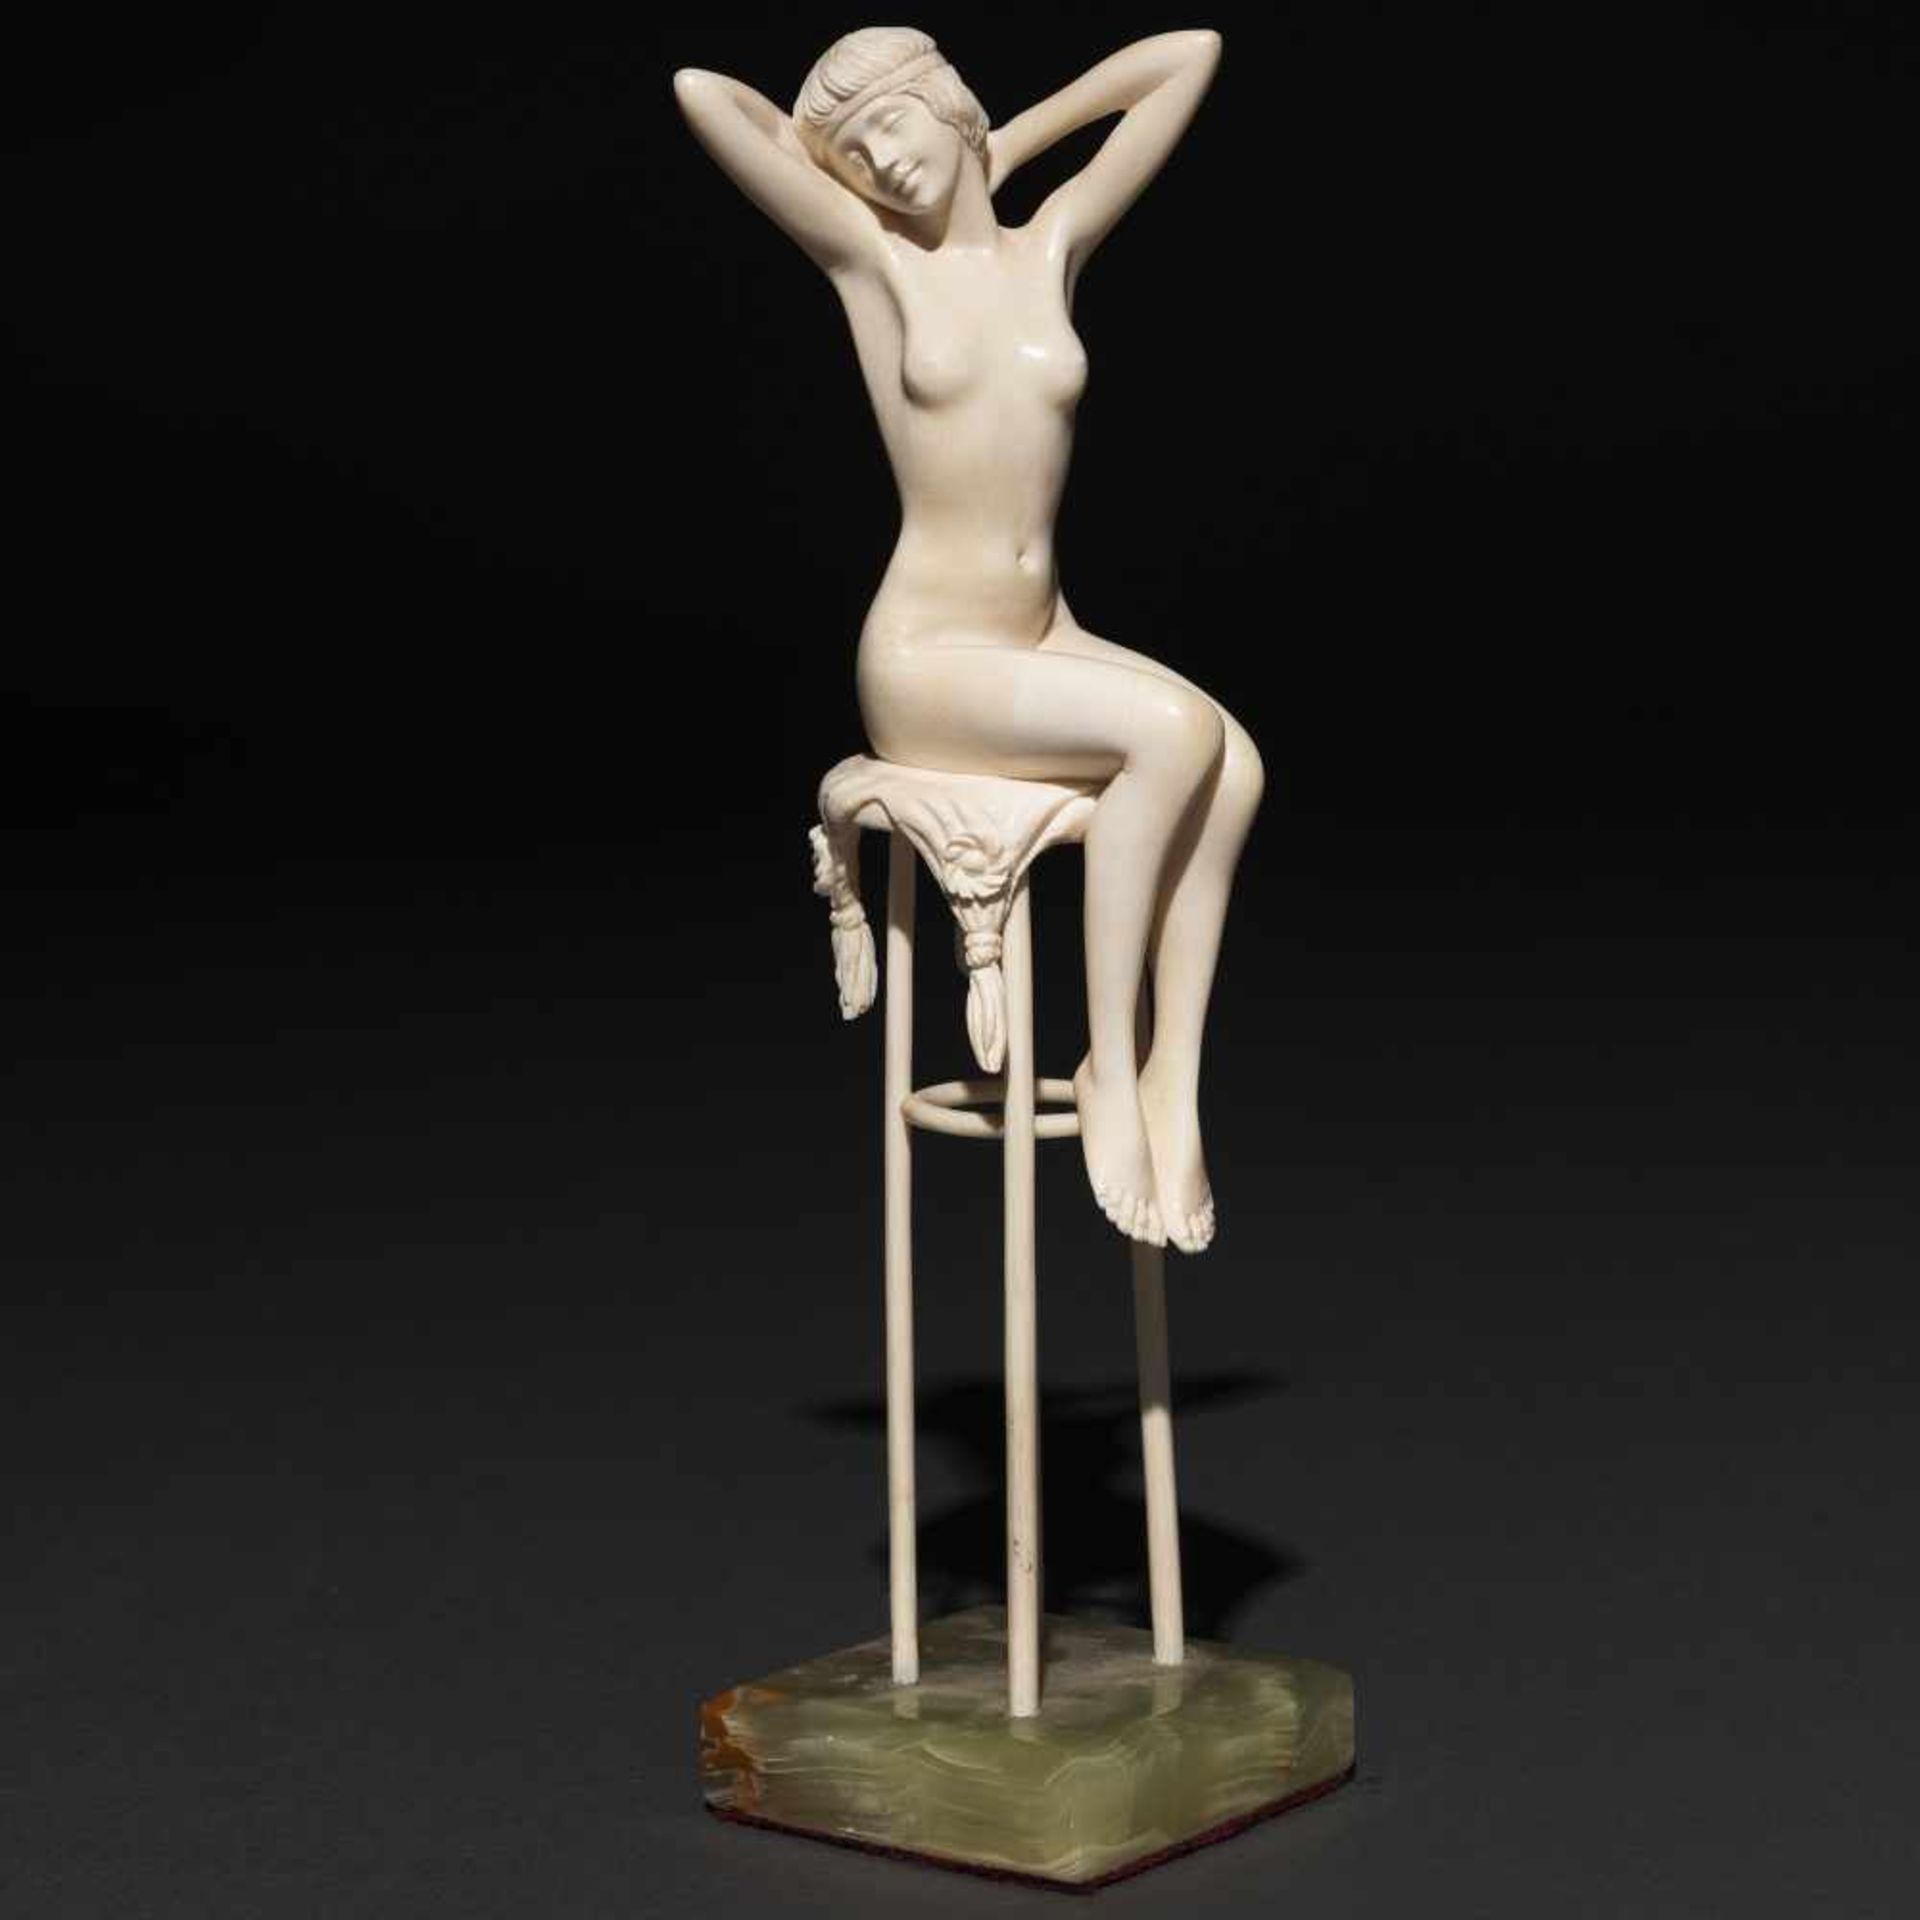 "Awakening" Figura escultórica en marfil tallado. Siglo XX